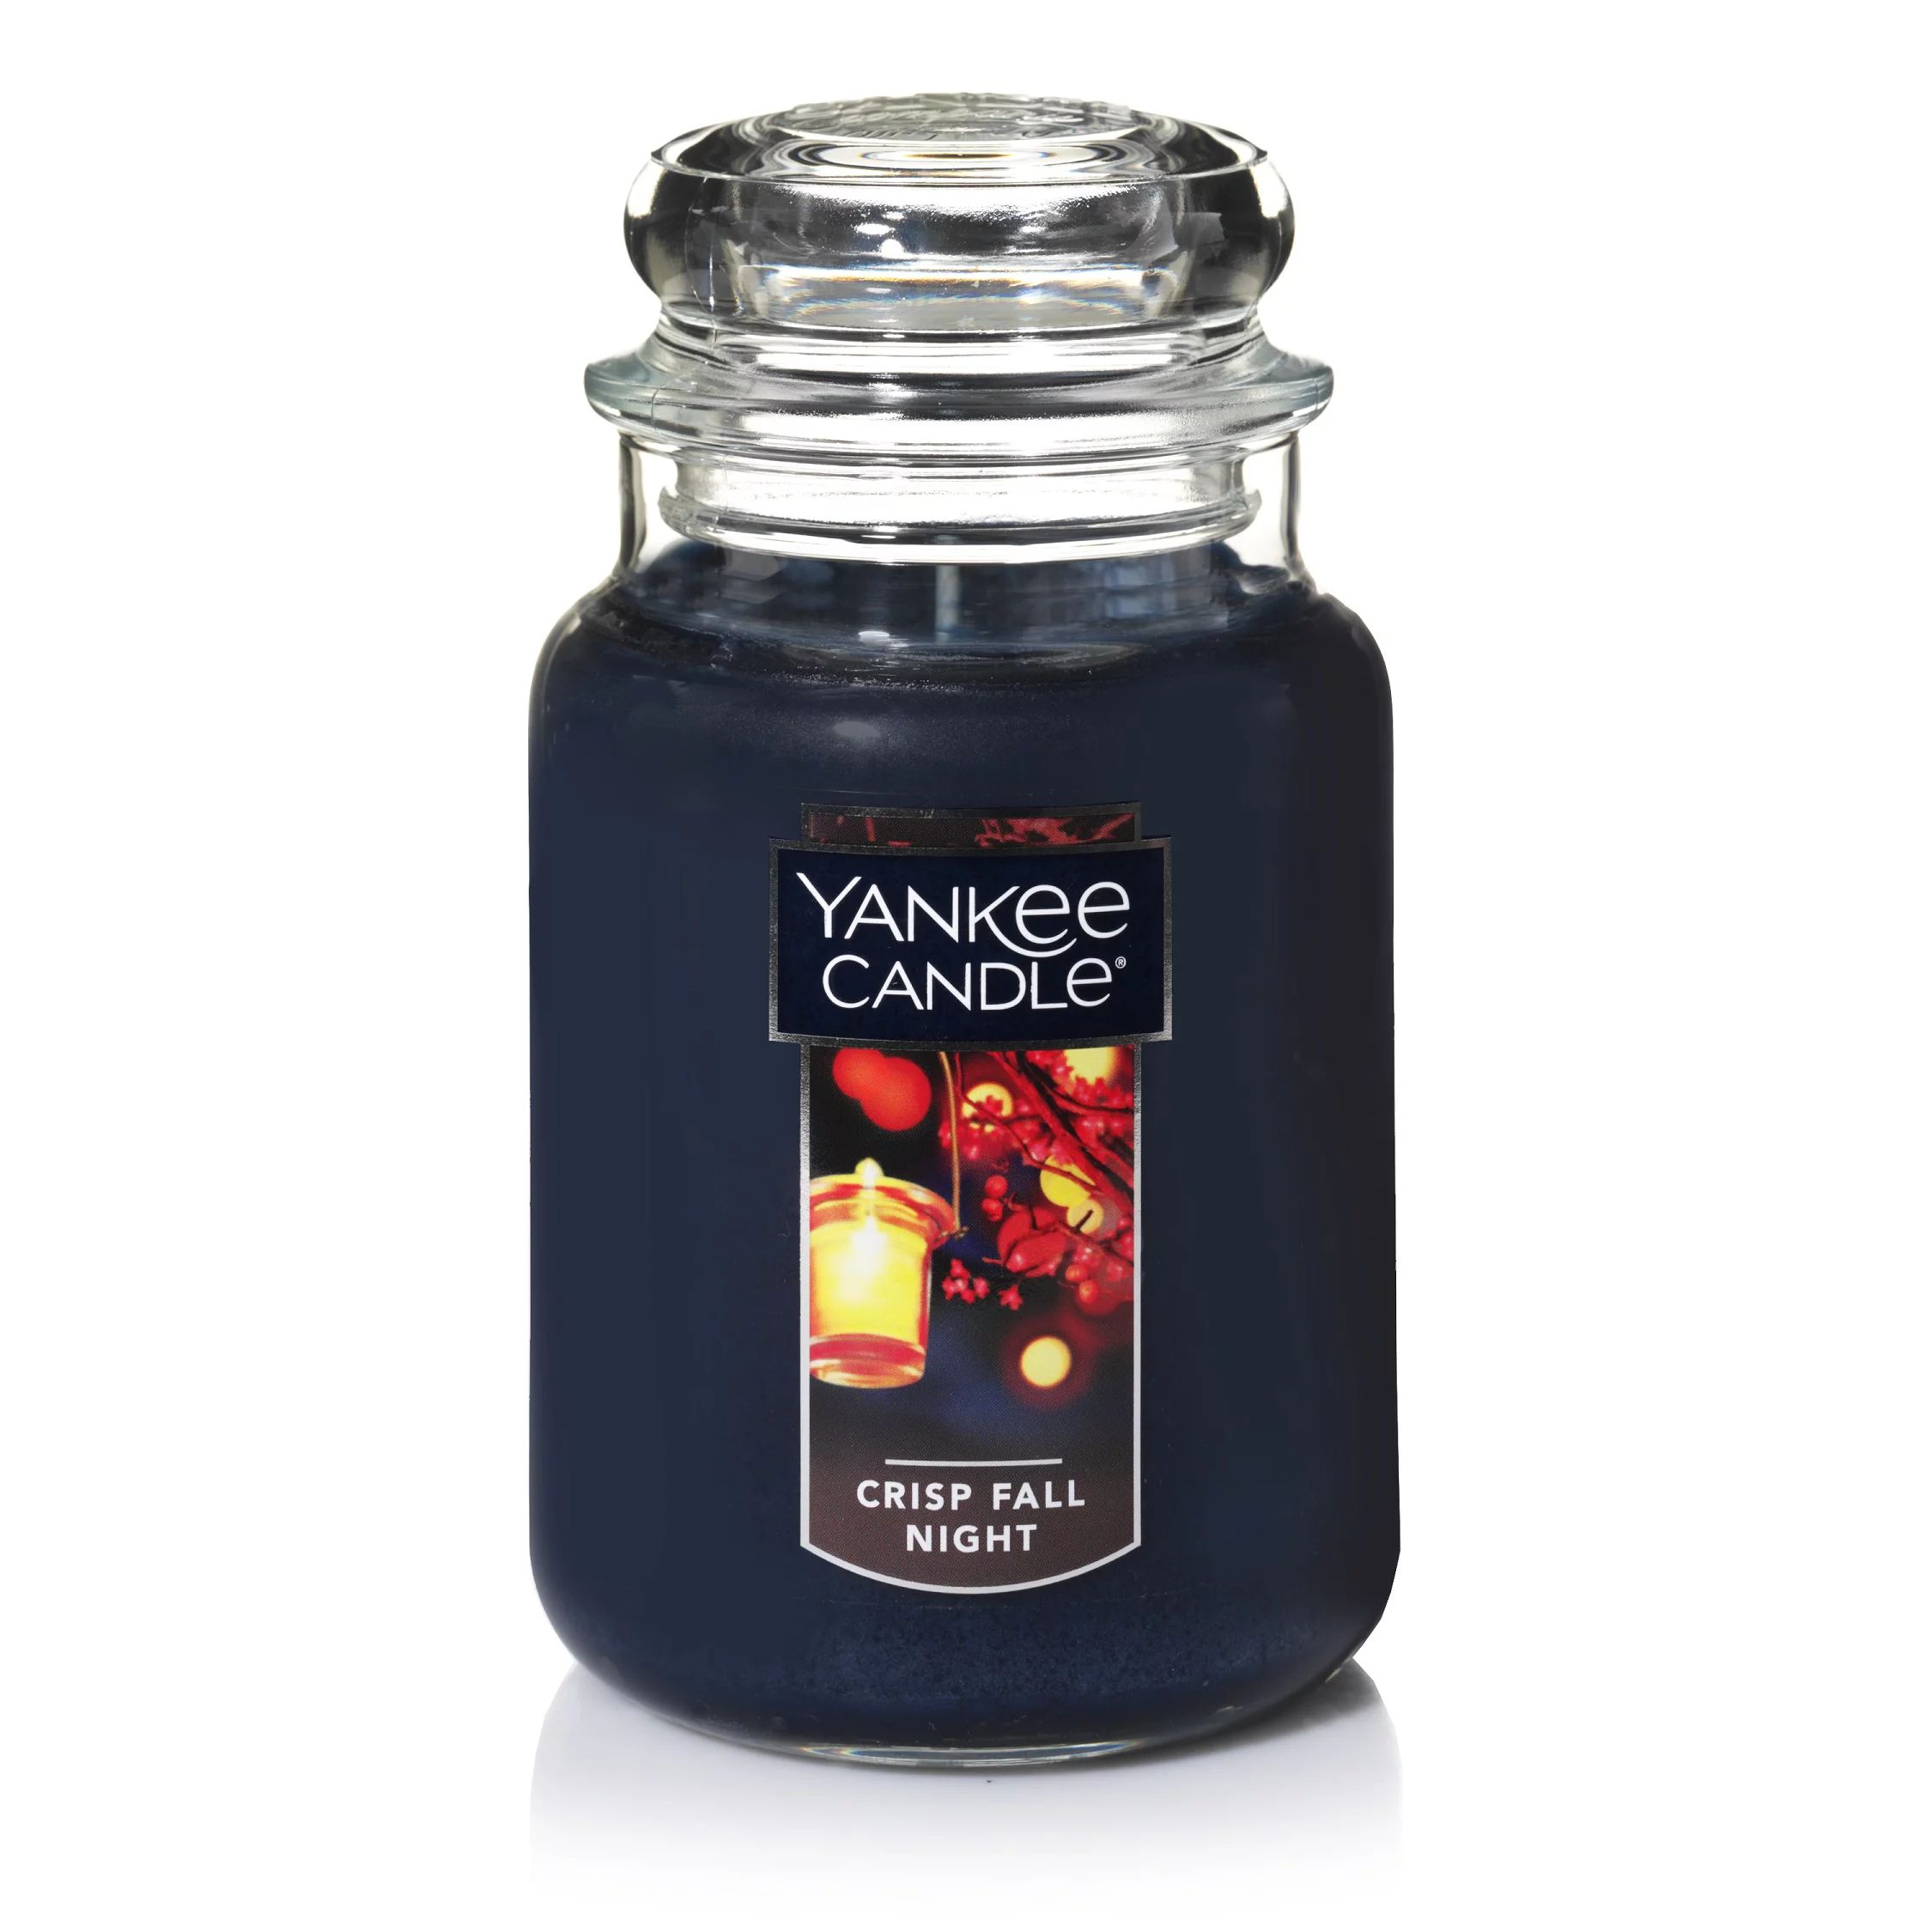 Yankee Candle Crisp Fall Night - Original Large Jar Scented Candle | Walmart (US)